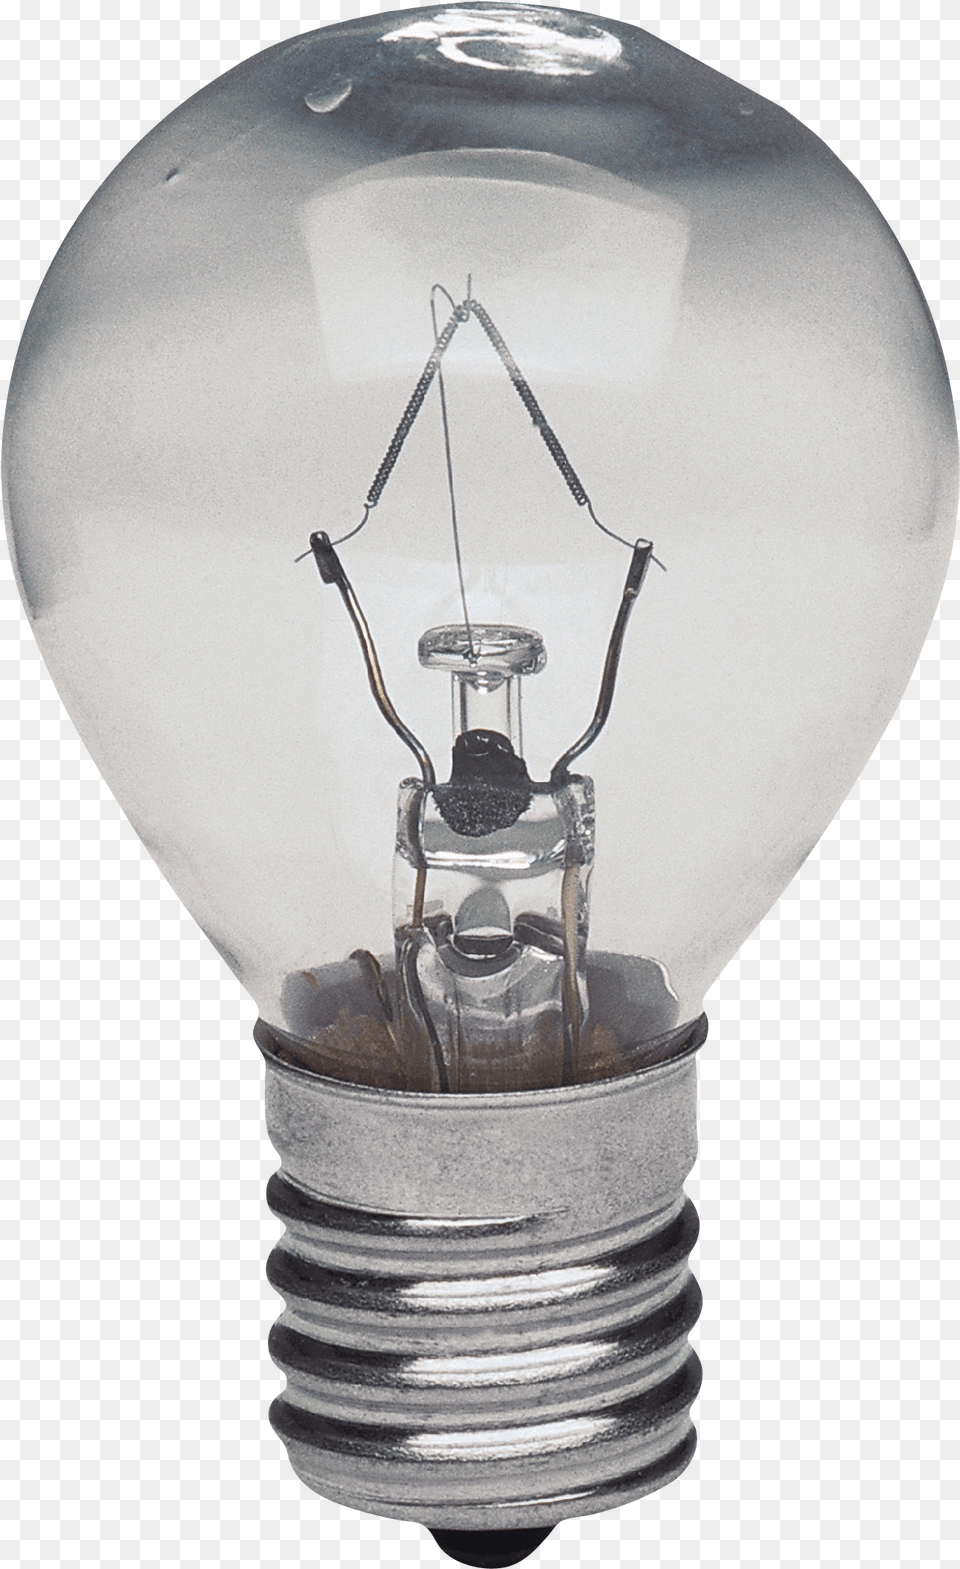 Bulb Light Free Picture Download Lightbulb Transparent Background Png Image